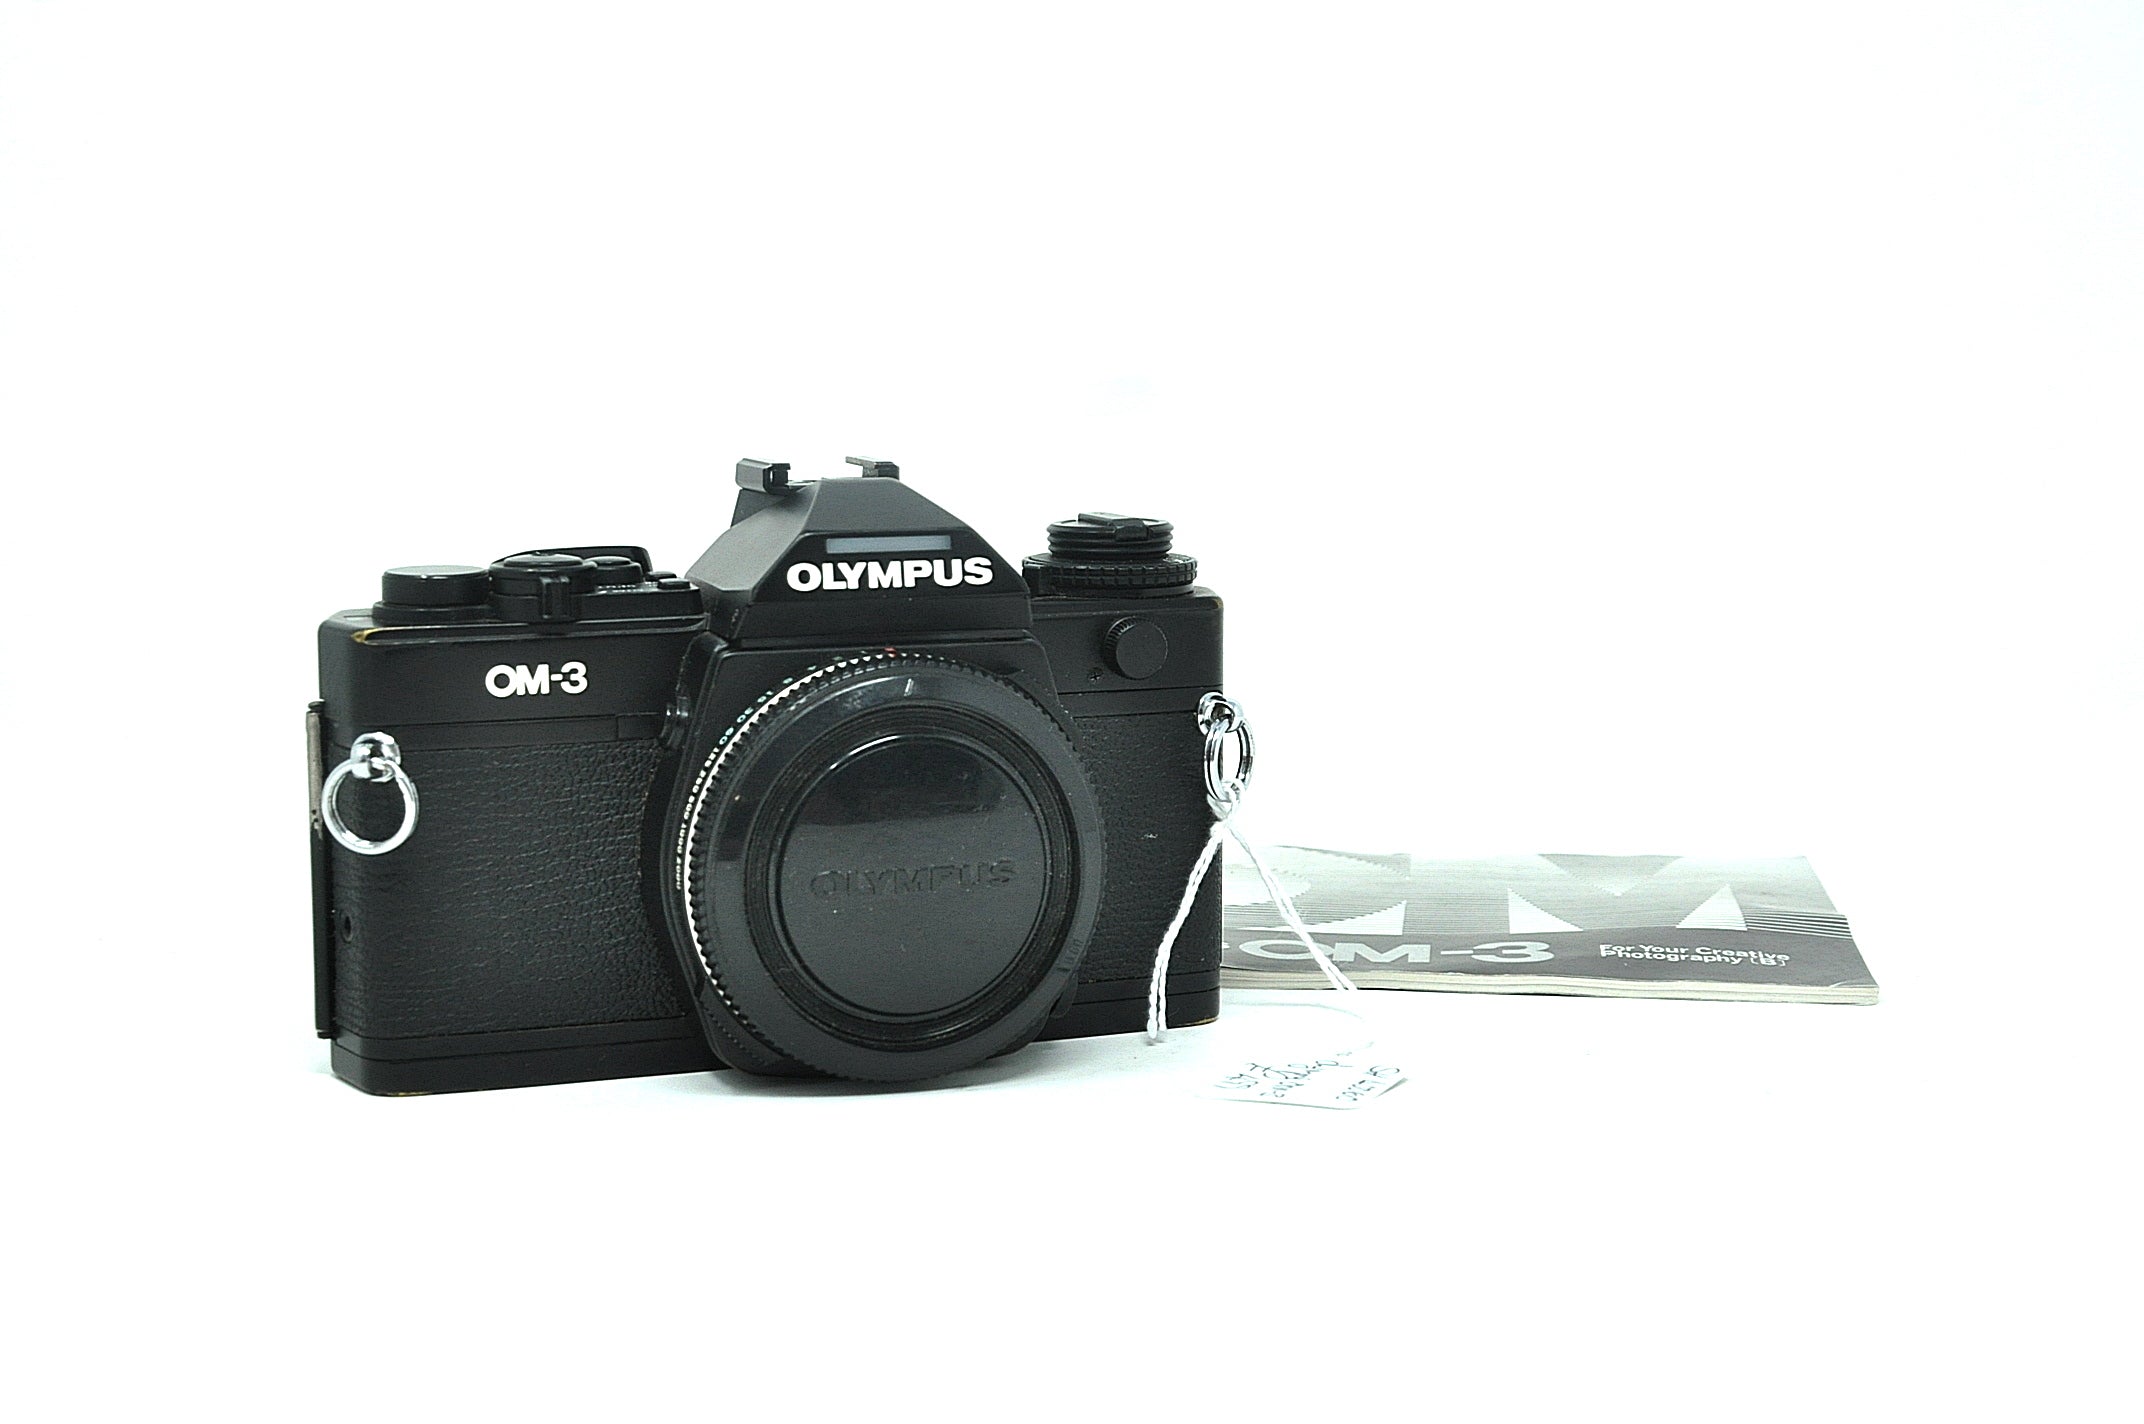 Used Olympus OM-3 Classic Film camera  (SH40060)